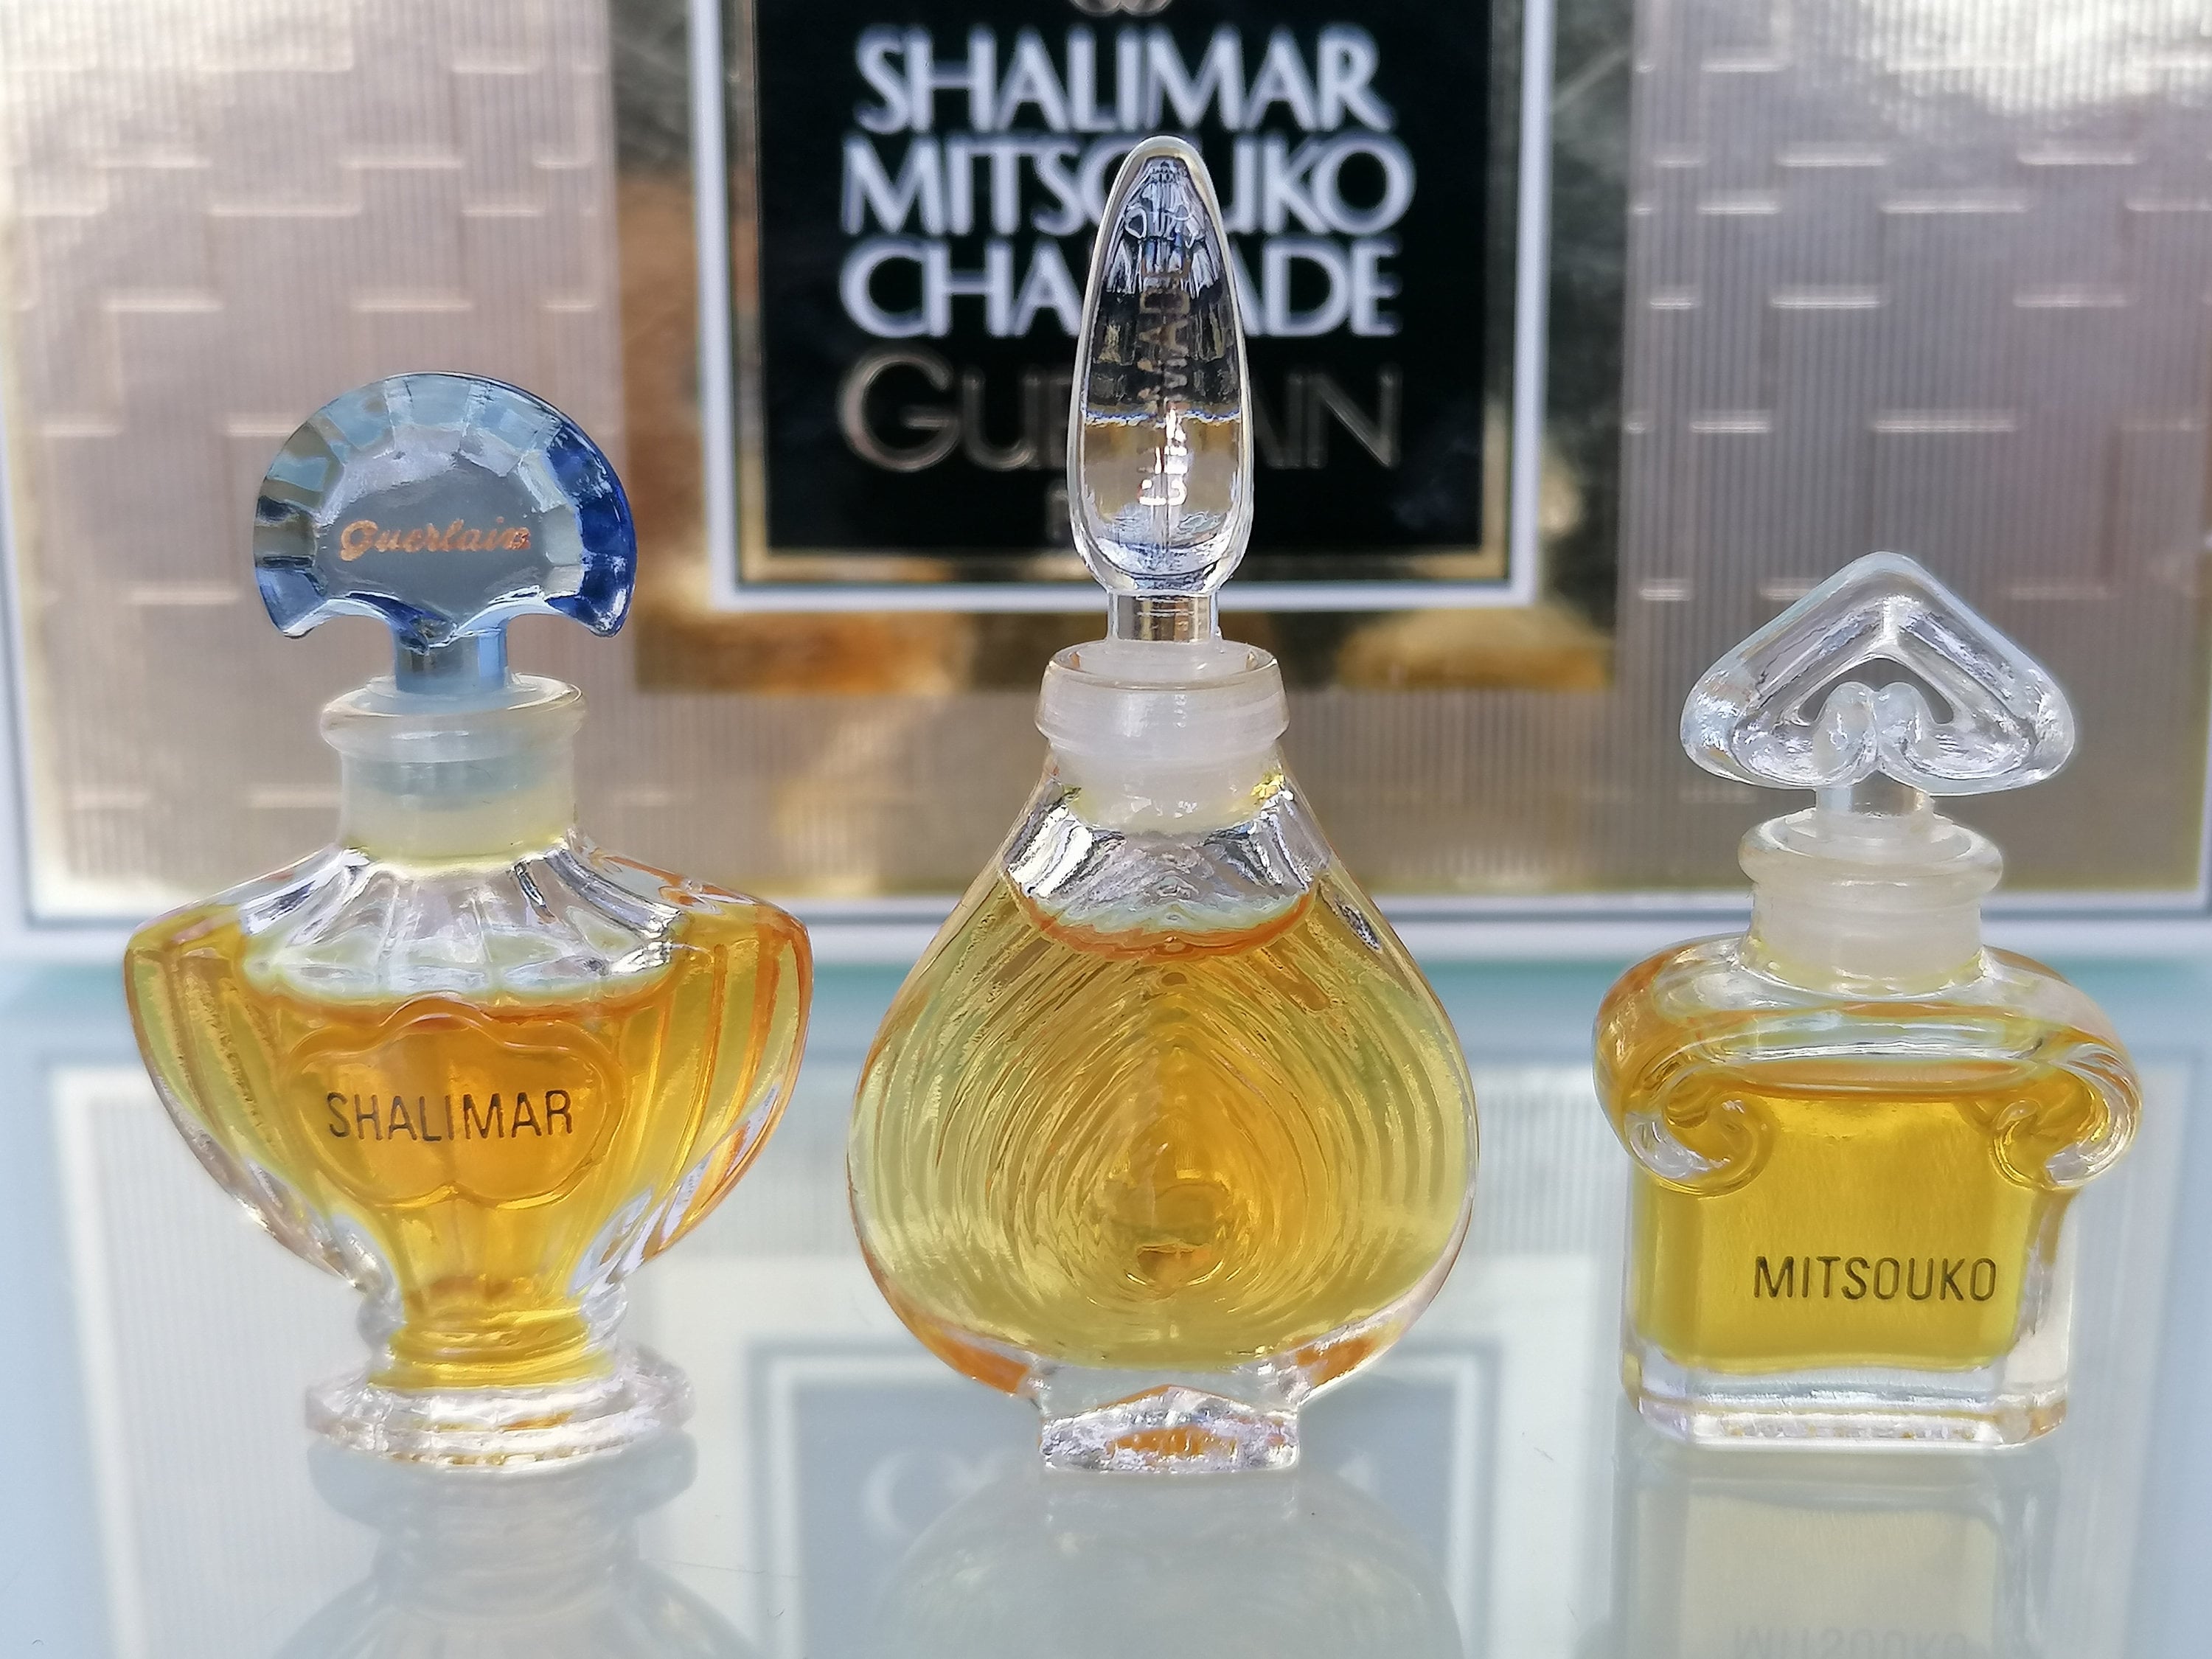 Guerlain - The Perfume Society